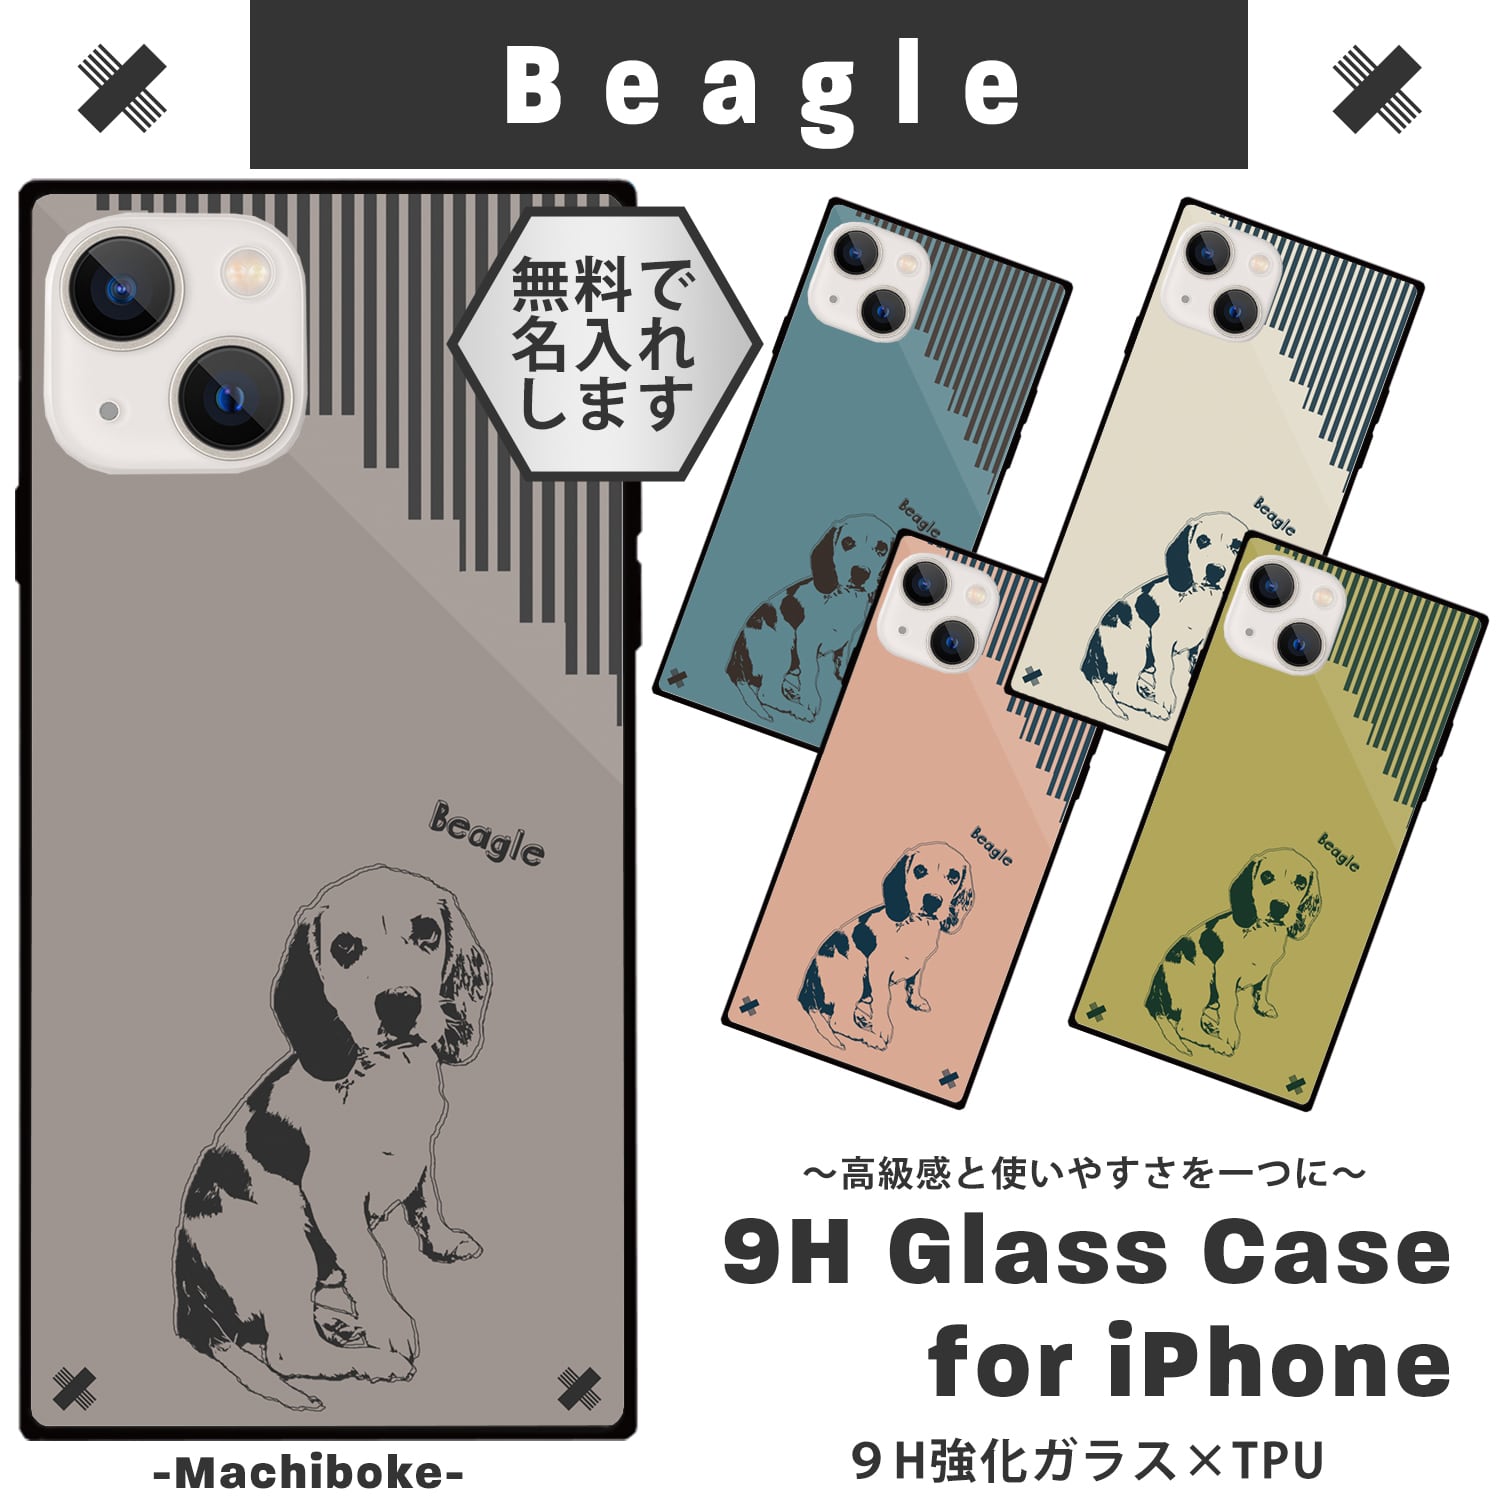 【Machiboke】 ビーグル iPhoneケース スマホケース 耐衝撃 犬 シンプルだけどオシャレで洗練されたデザイン レディース メンズ お揃い ペア 名入れ無料  送料込み